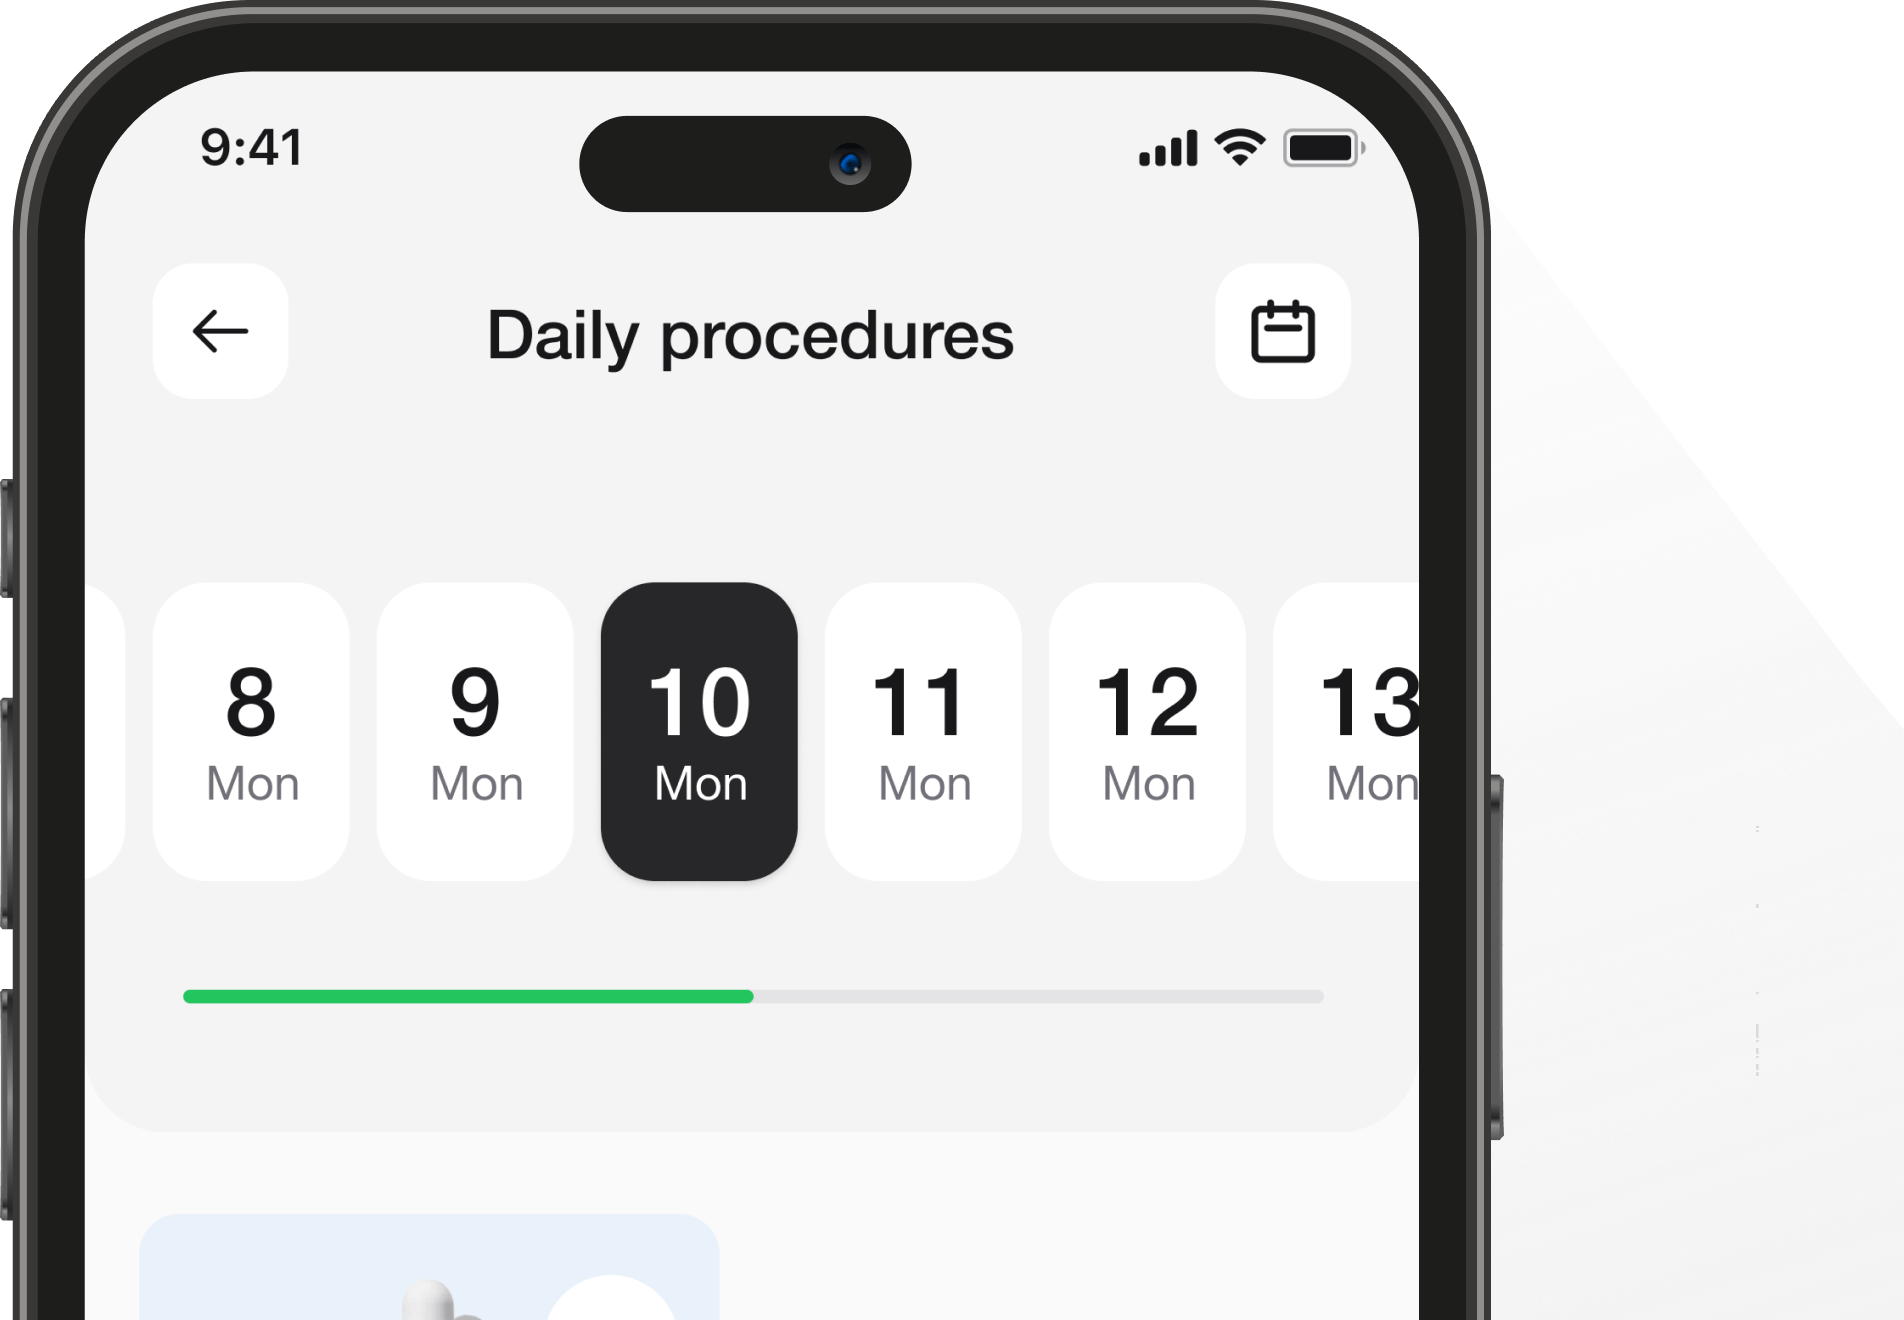 daily procedures calendar image